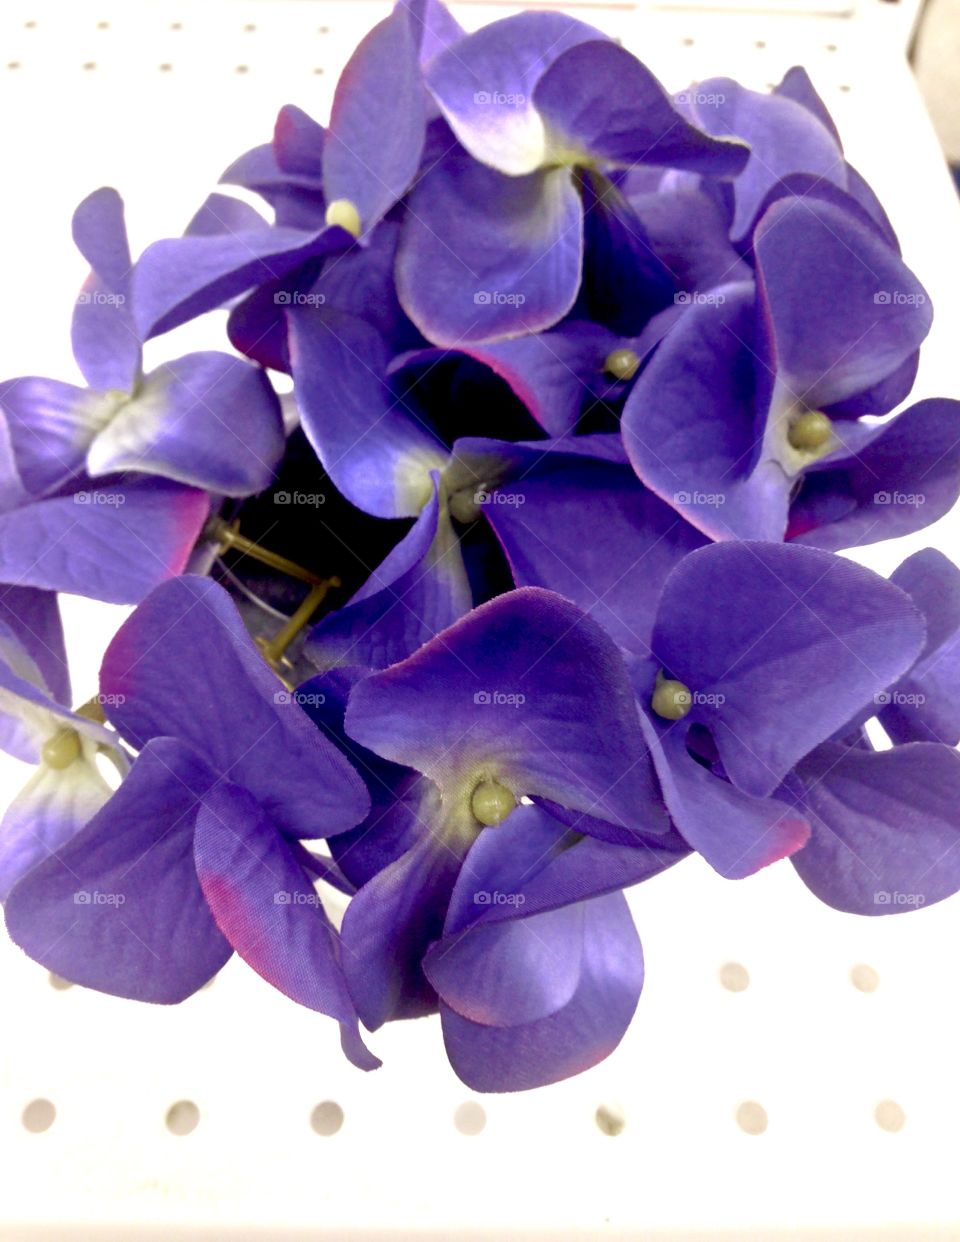 Beautiful Purple Petals

Published by:
HappyBrownMonkey 